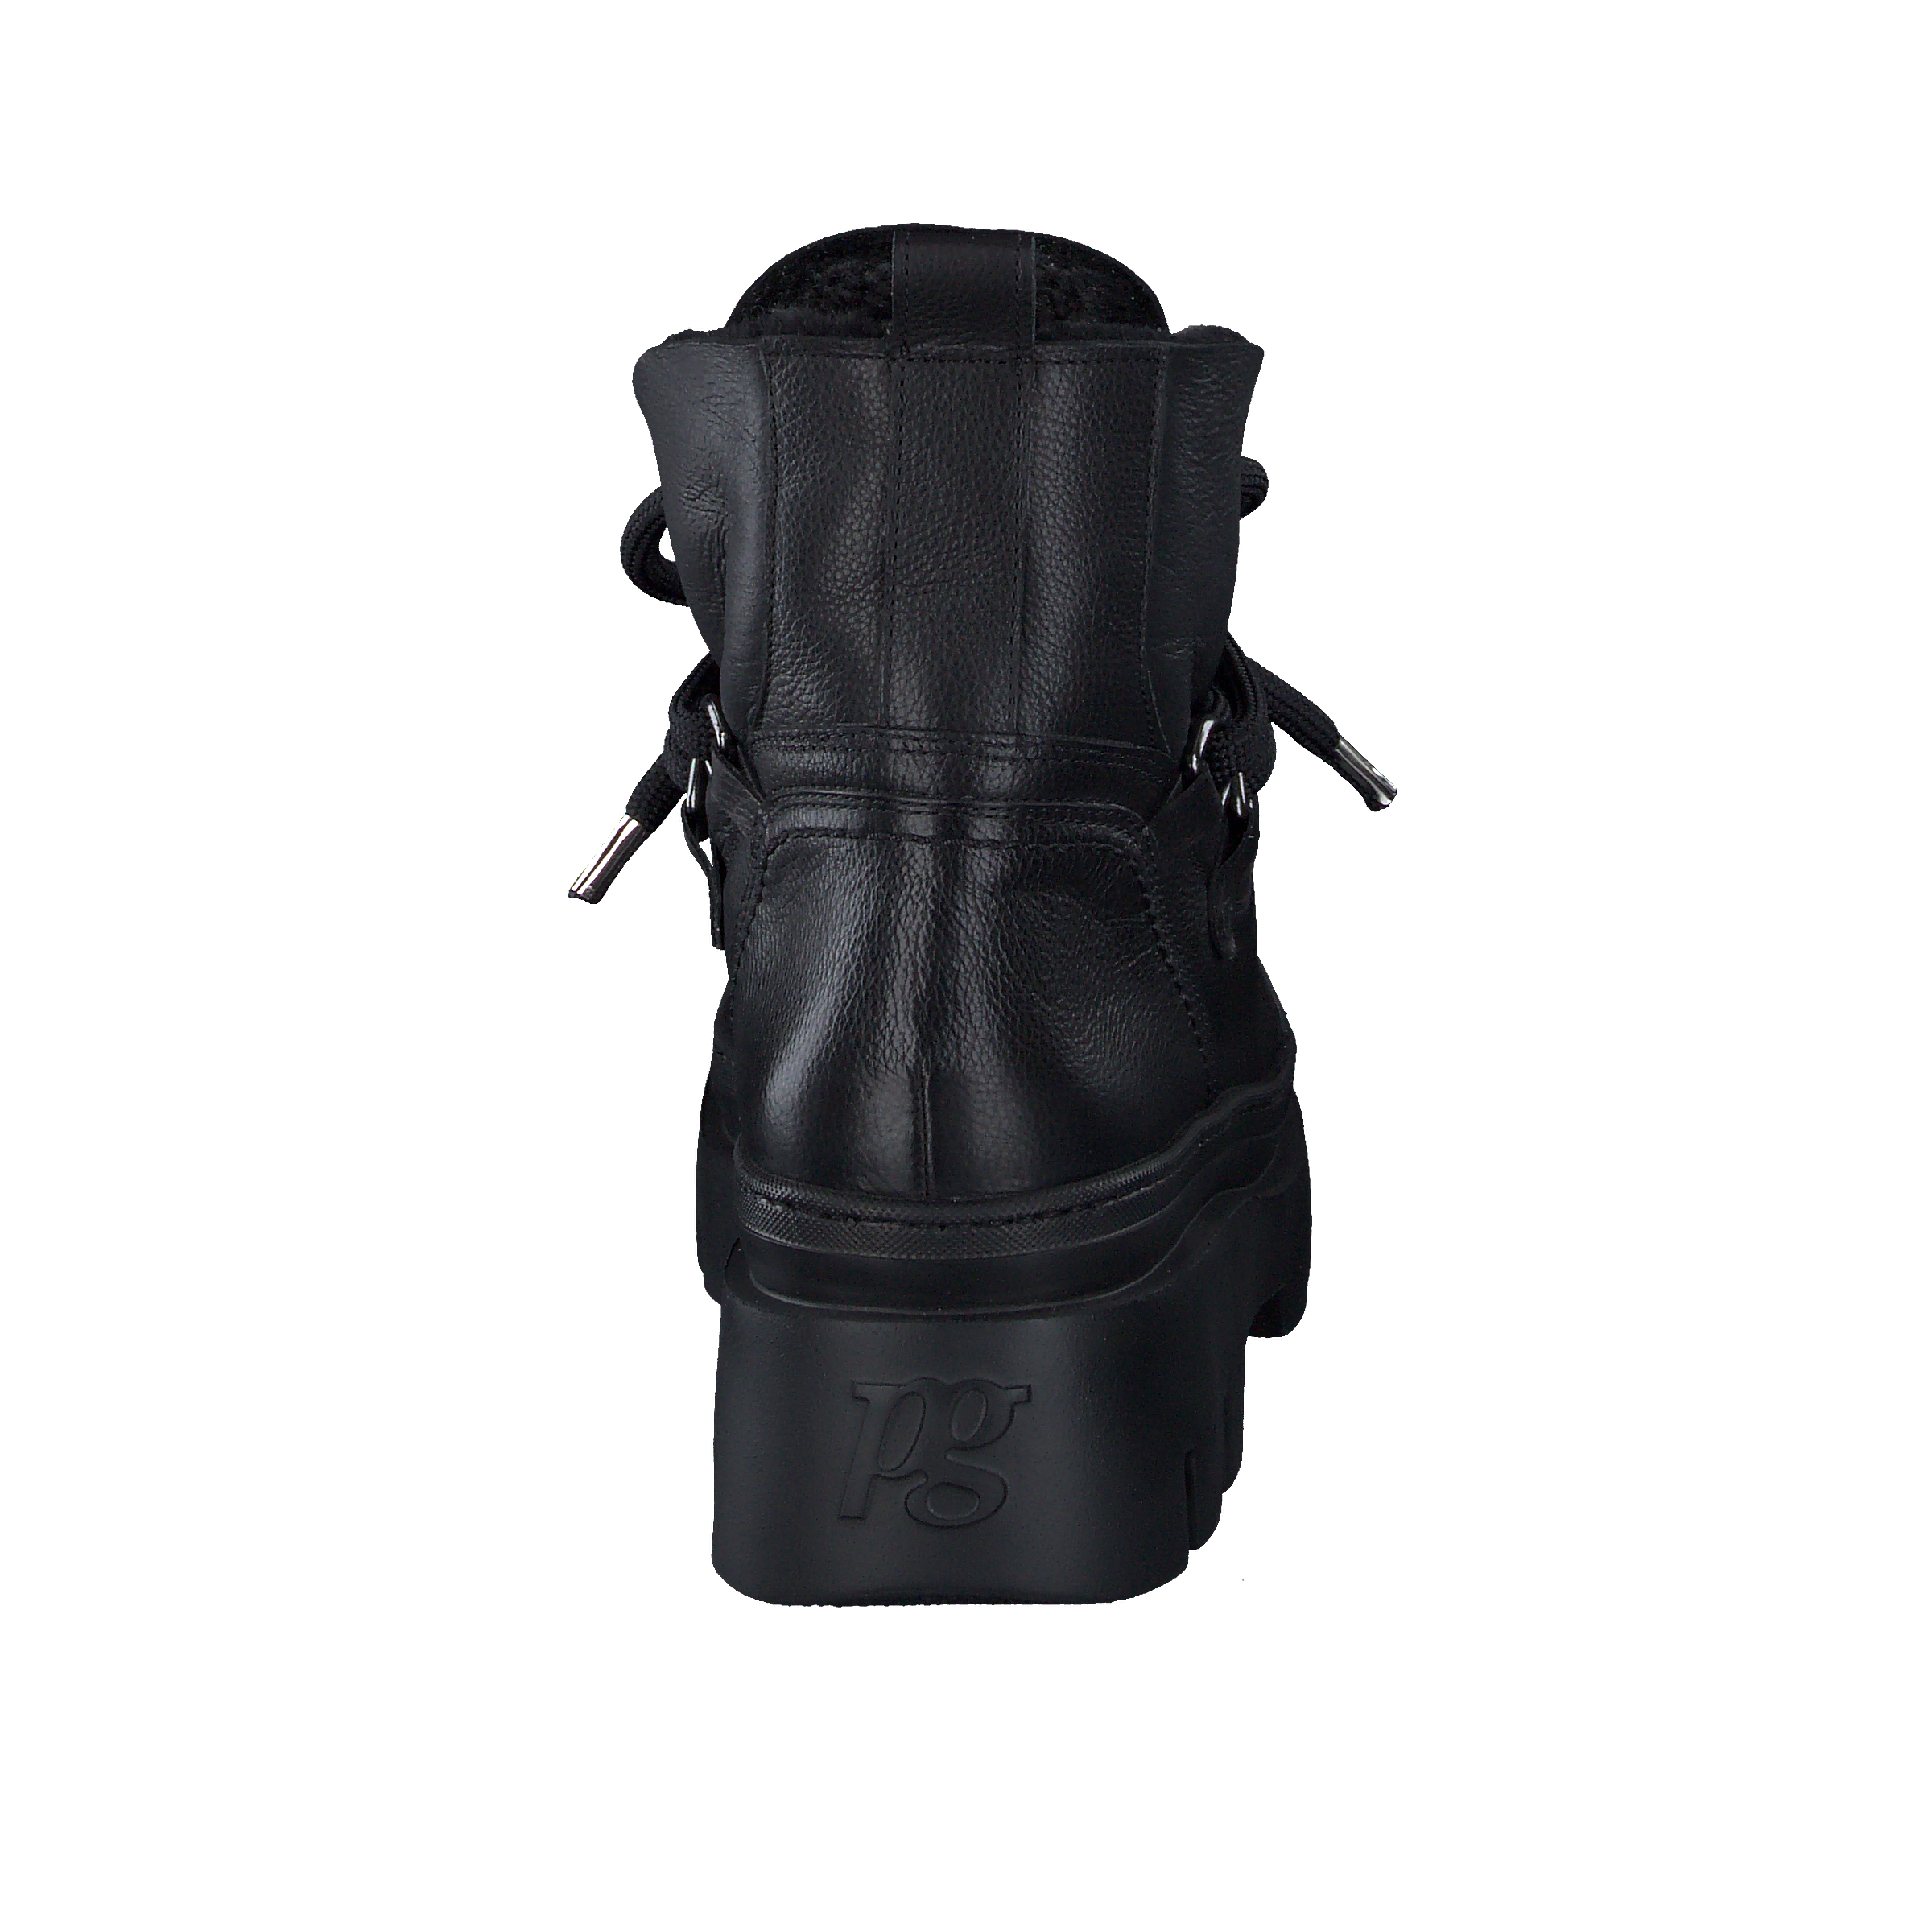 Paul Green Schnürbootie - Black smooth leather